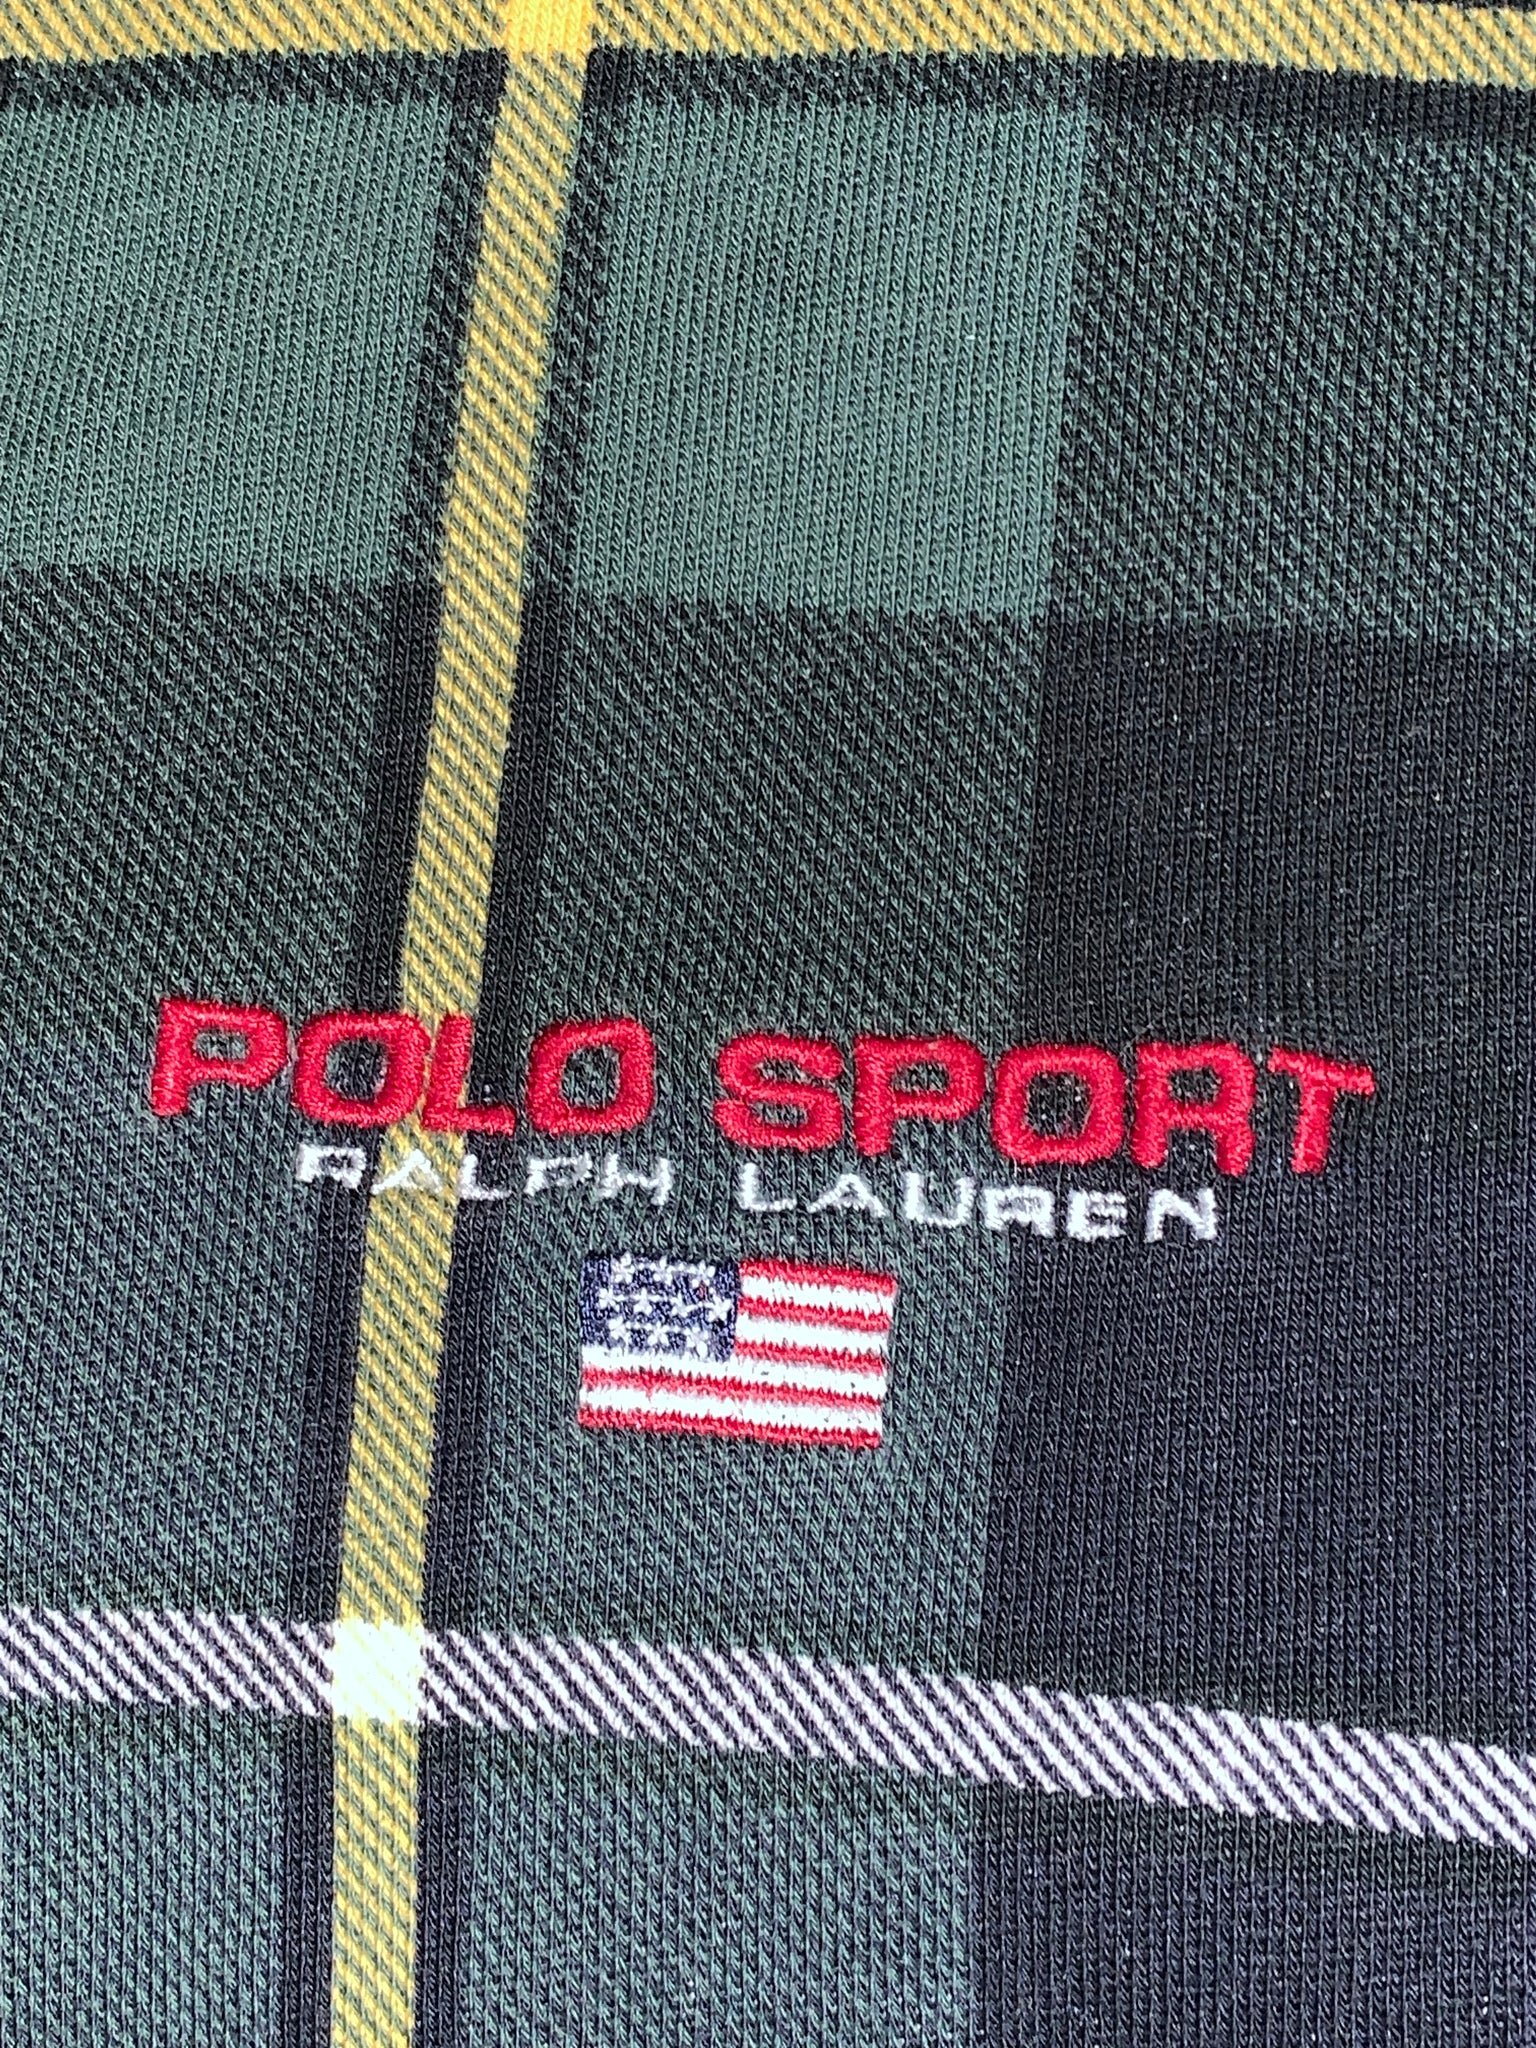 XL - Vintage Sport Ralph Lauren Plaid Sweater – Twisted Thrift